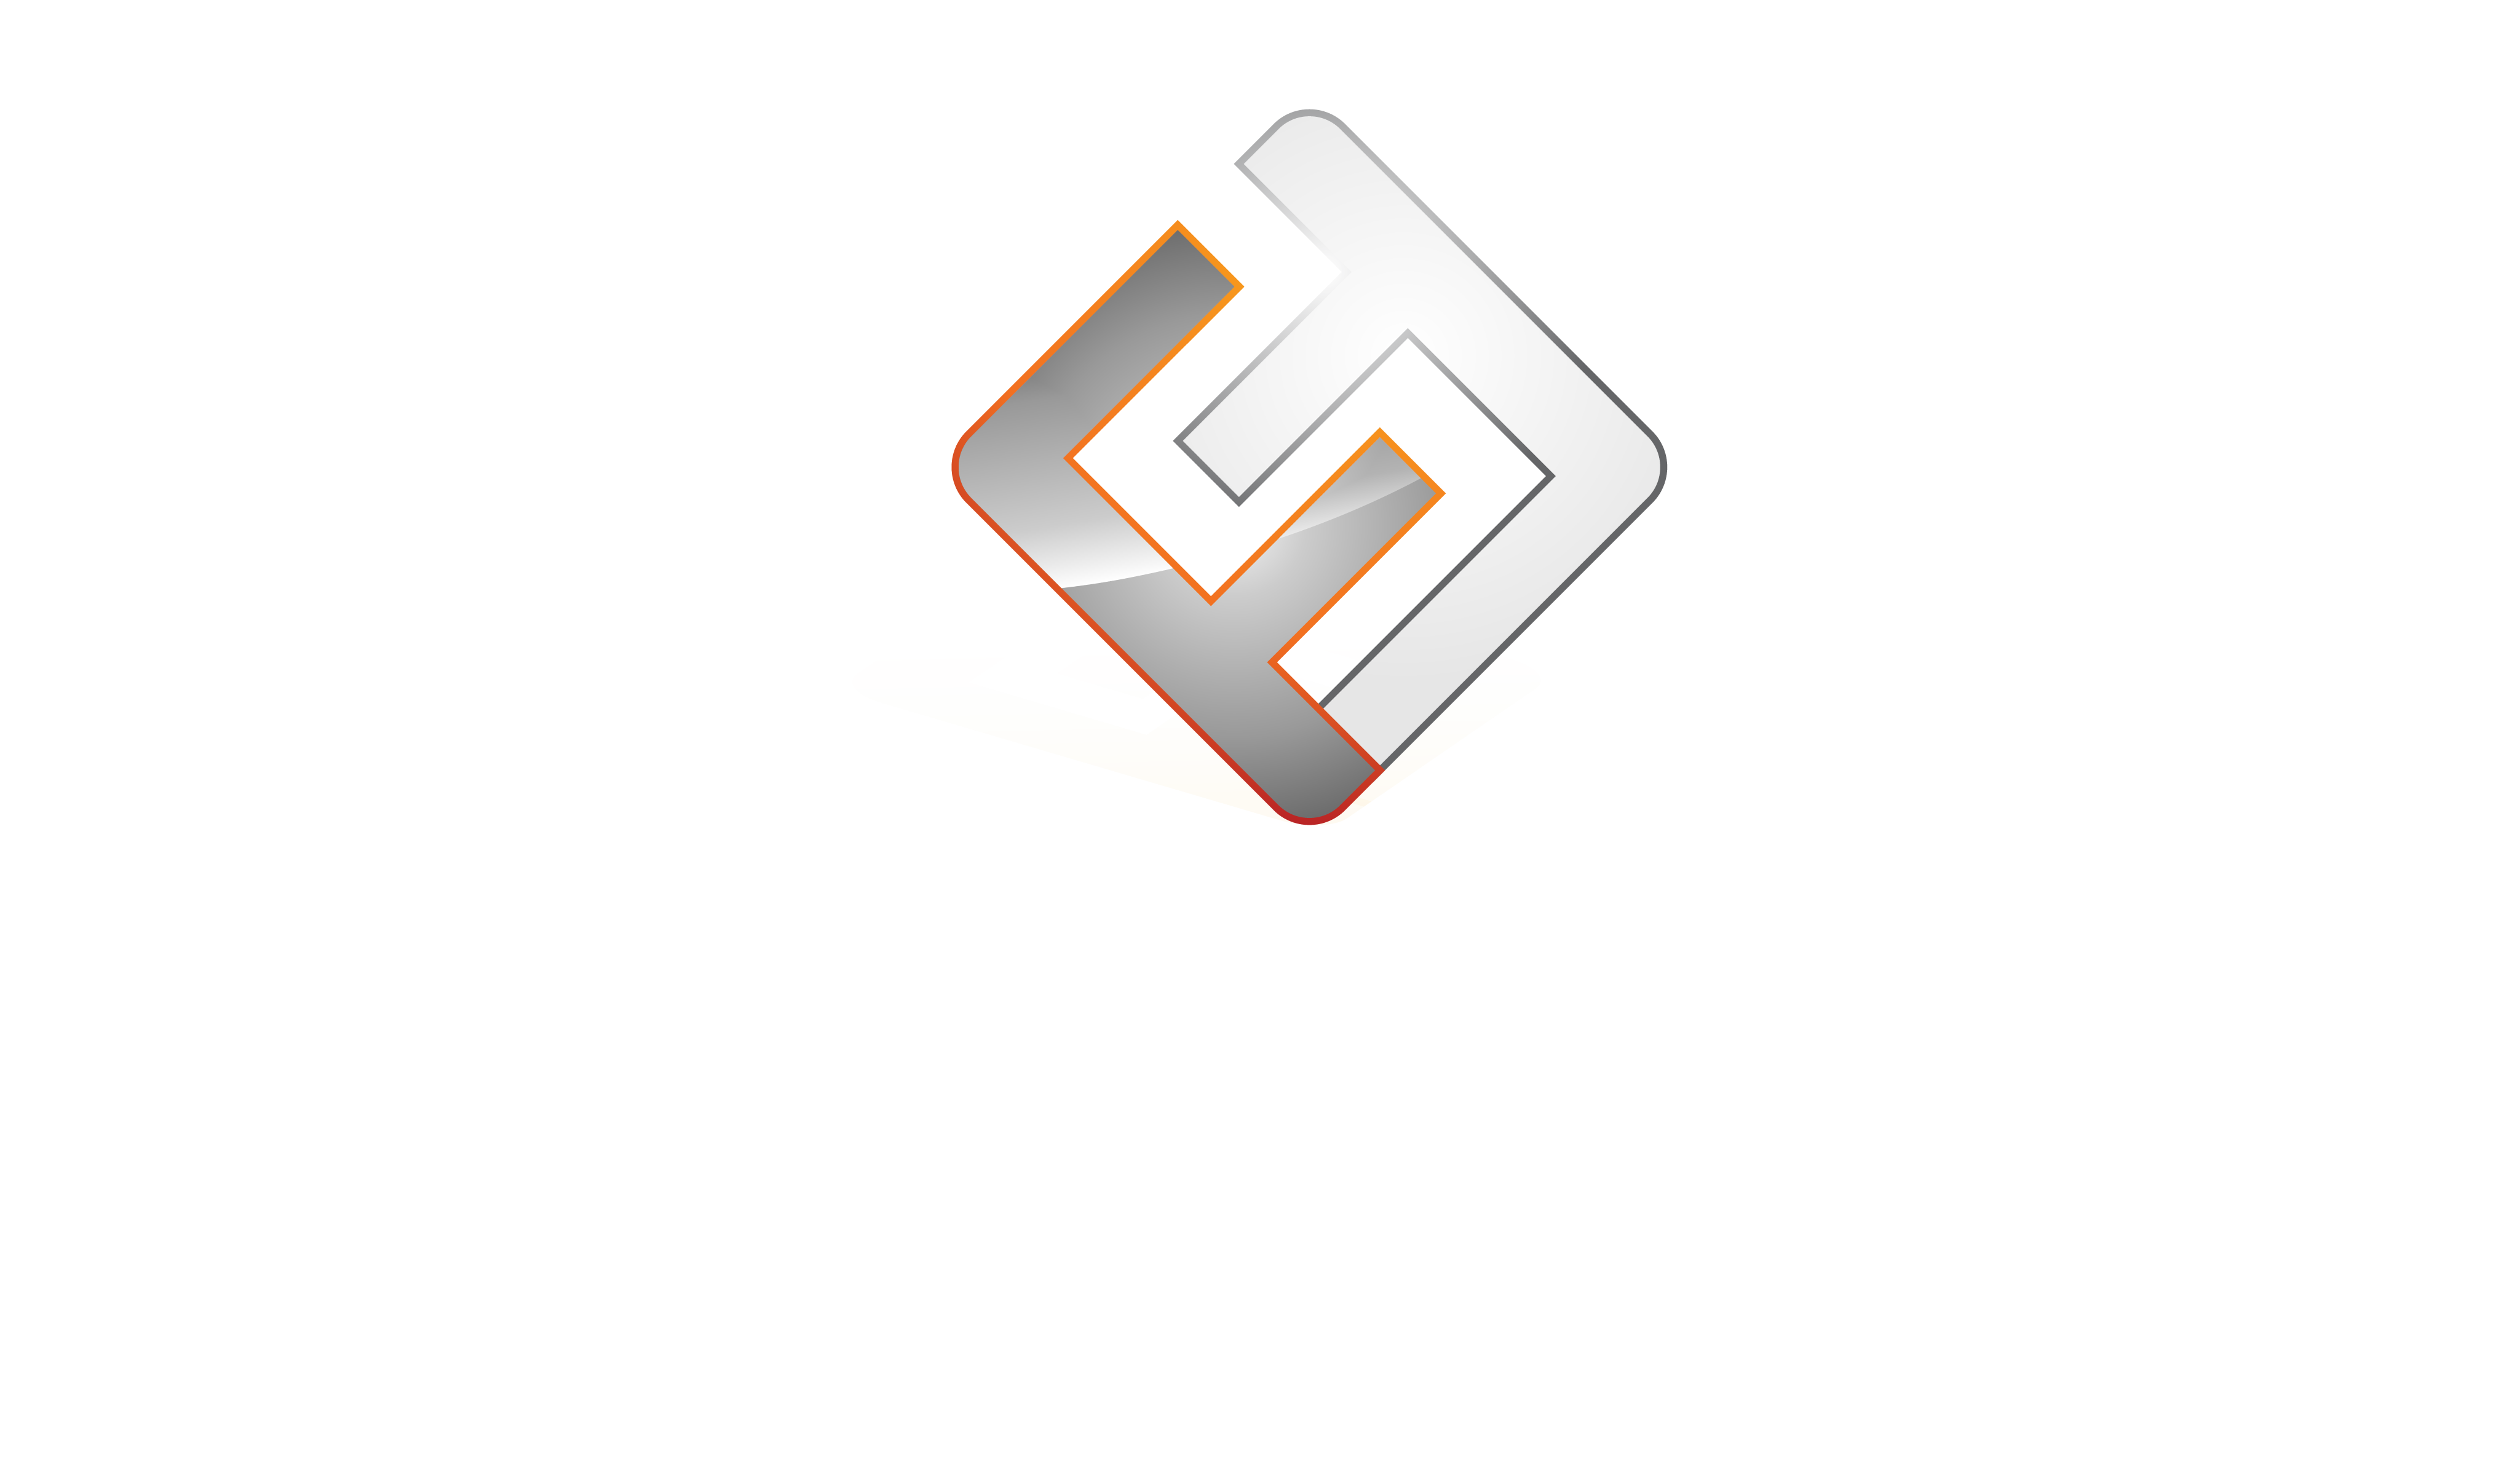 finishinghands.com